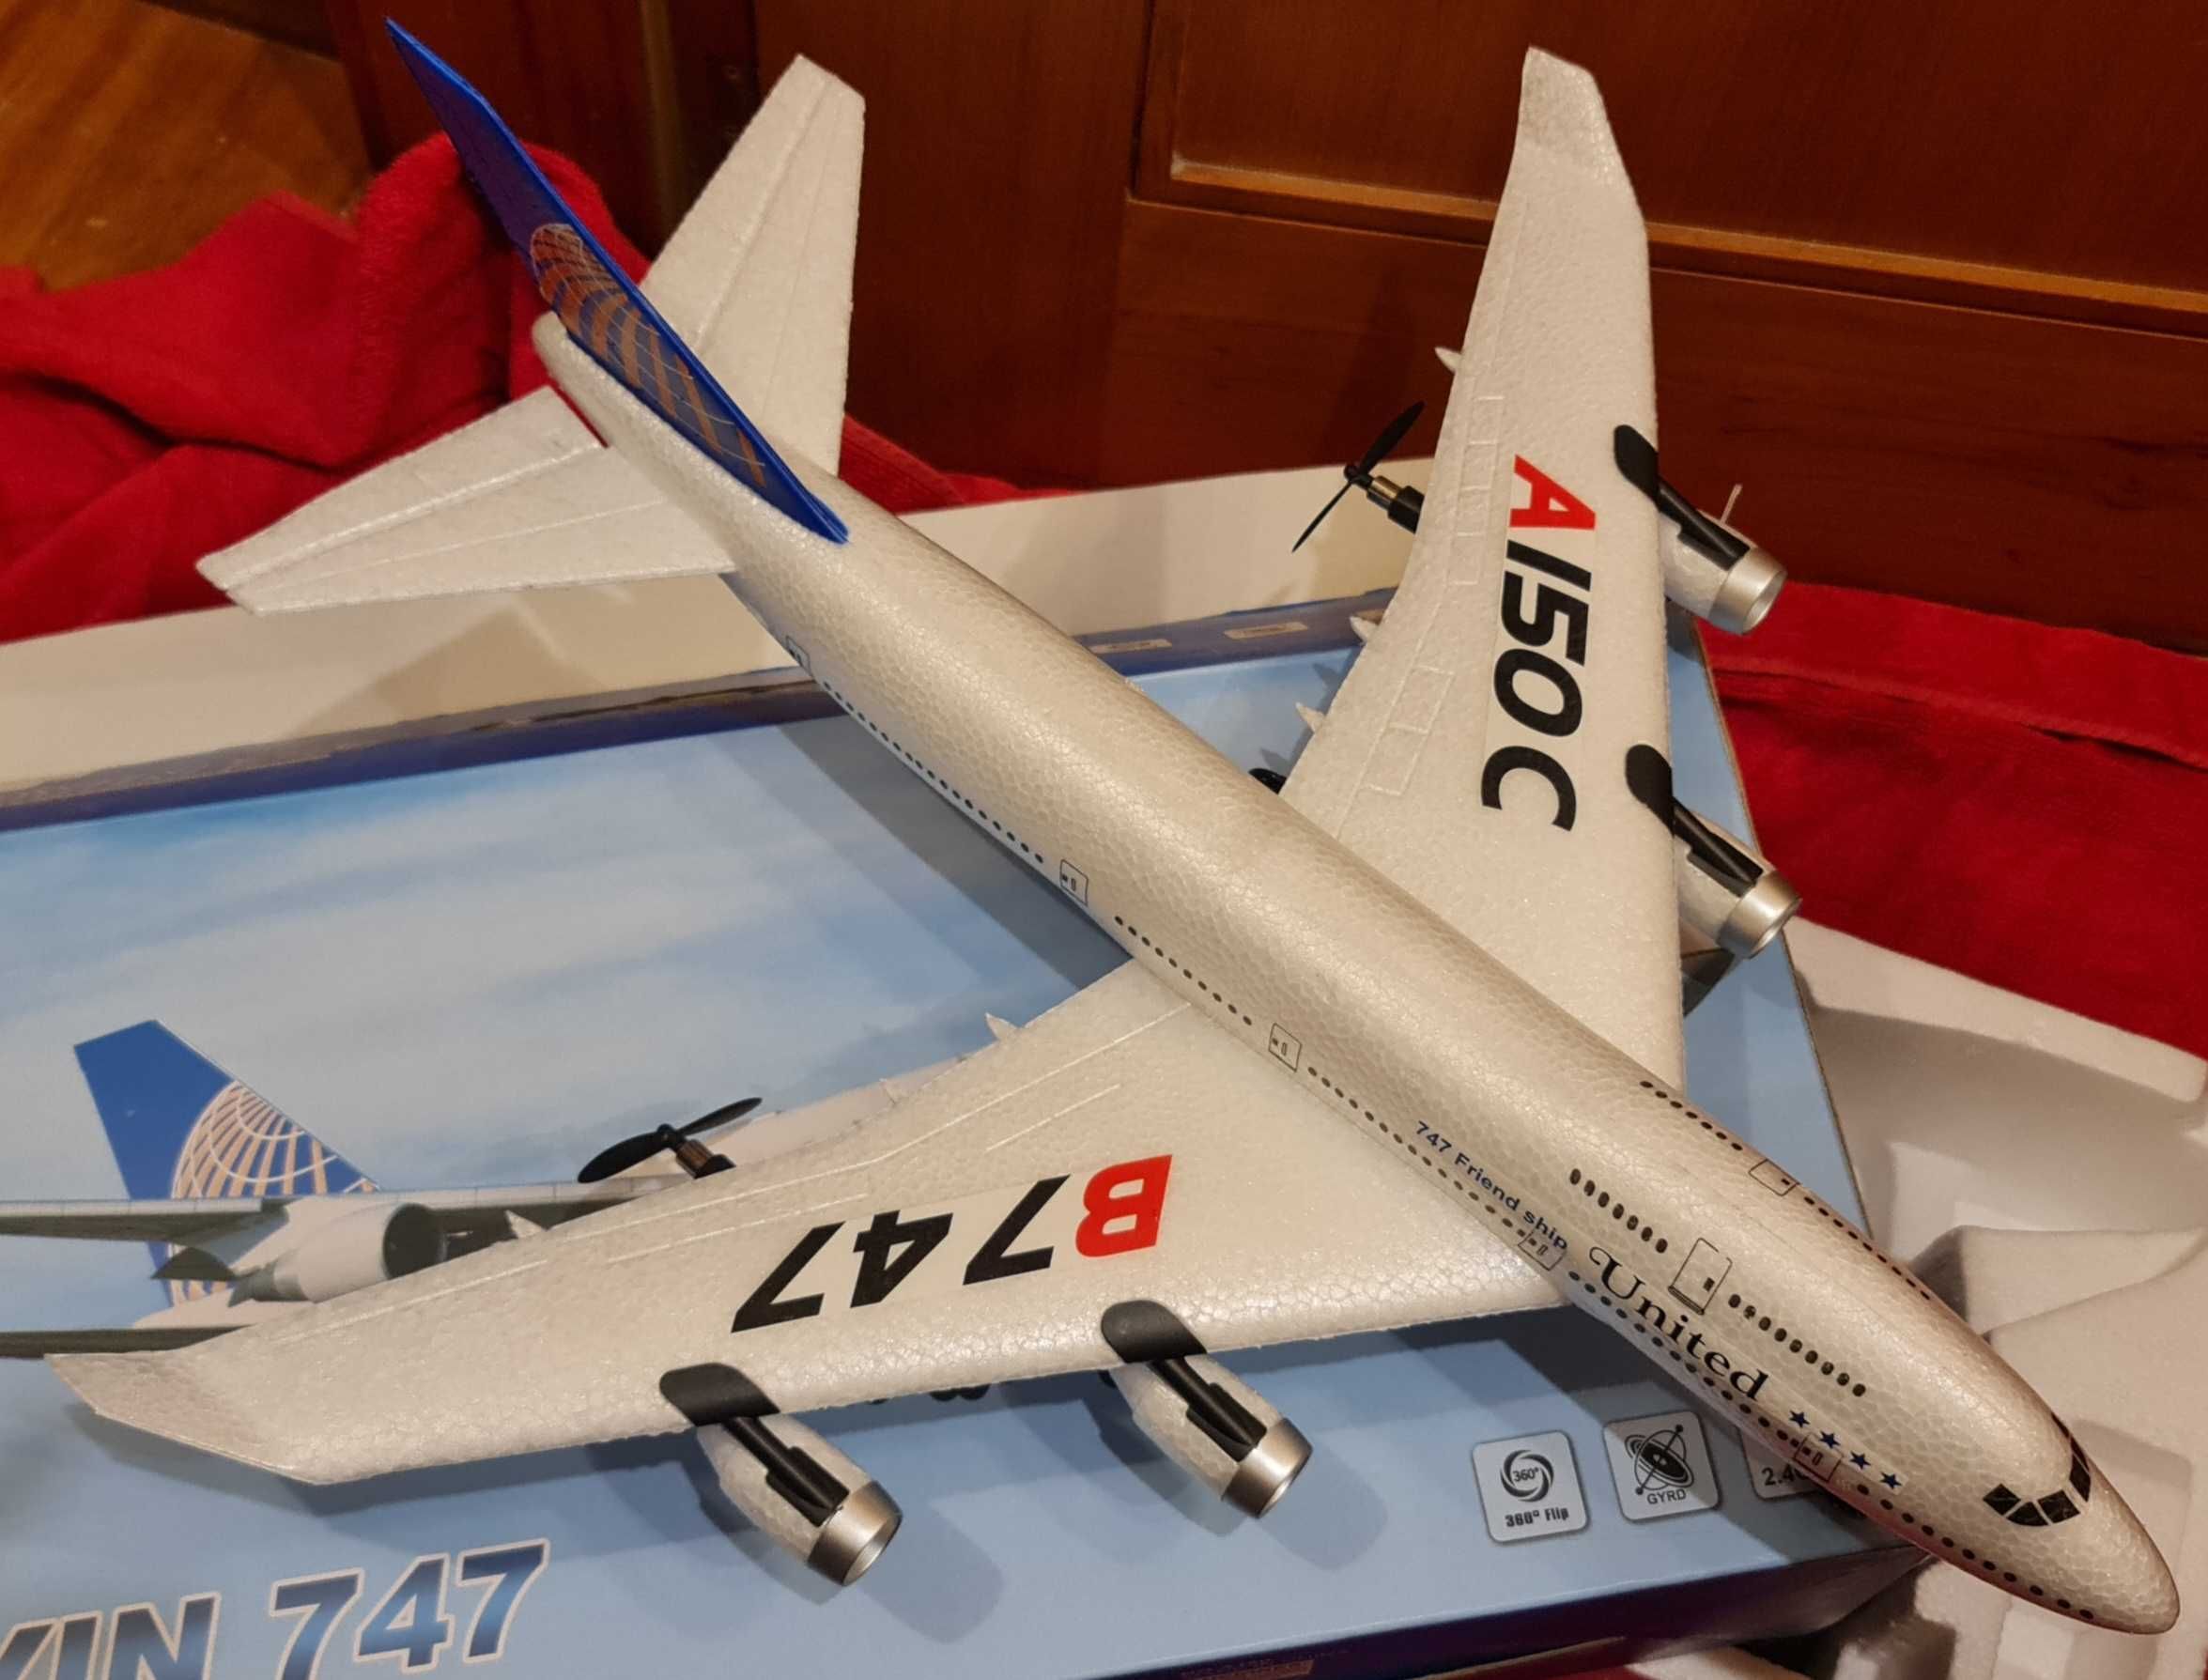 Boing 747 - Aeromodelismo